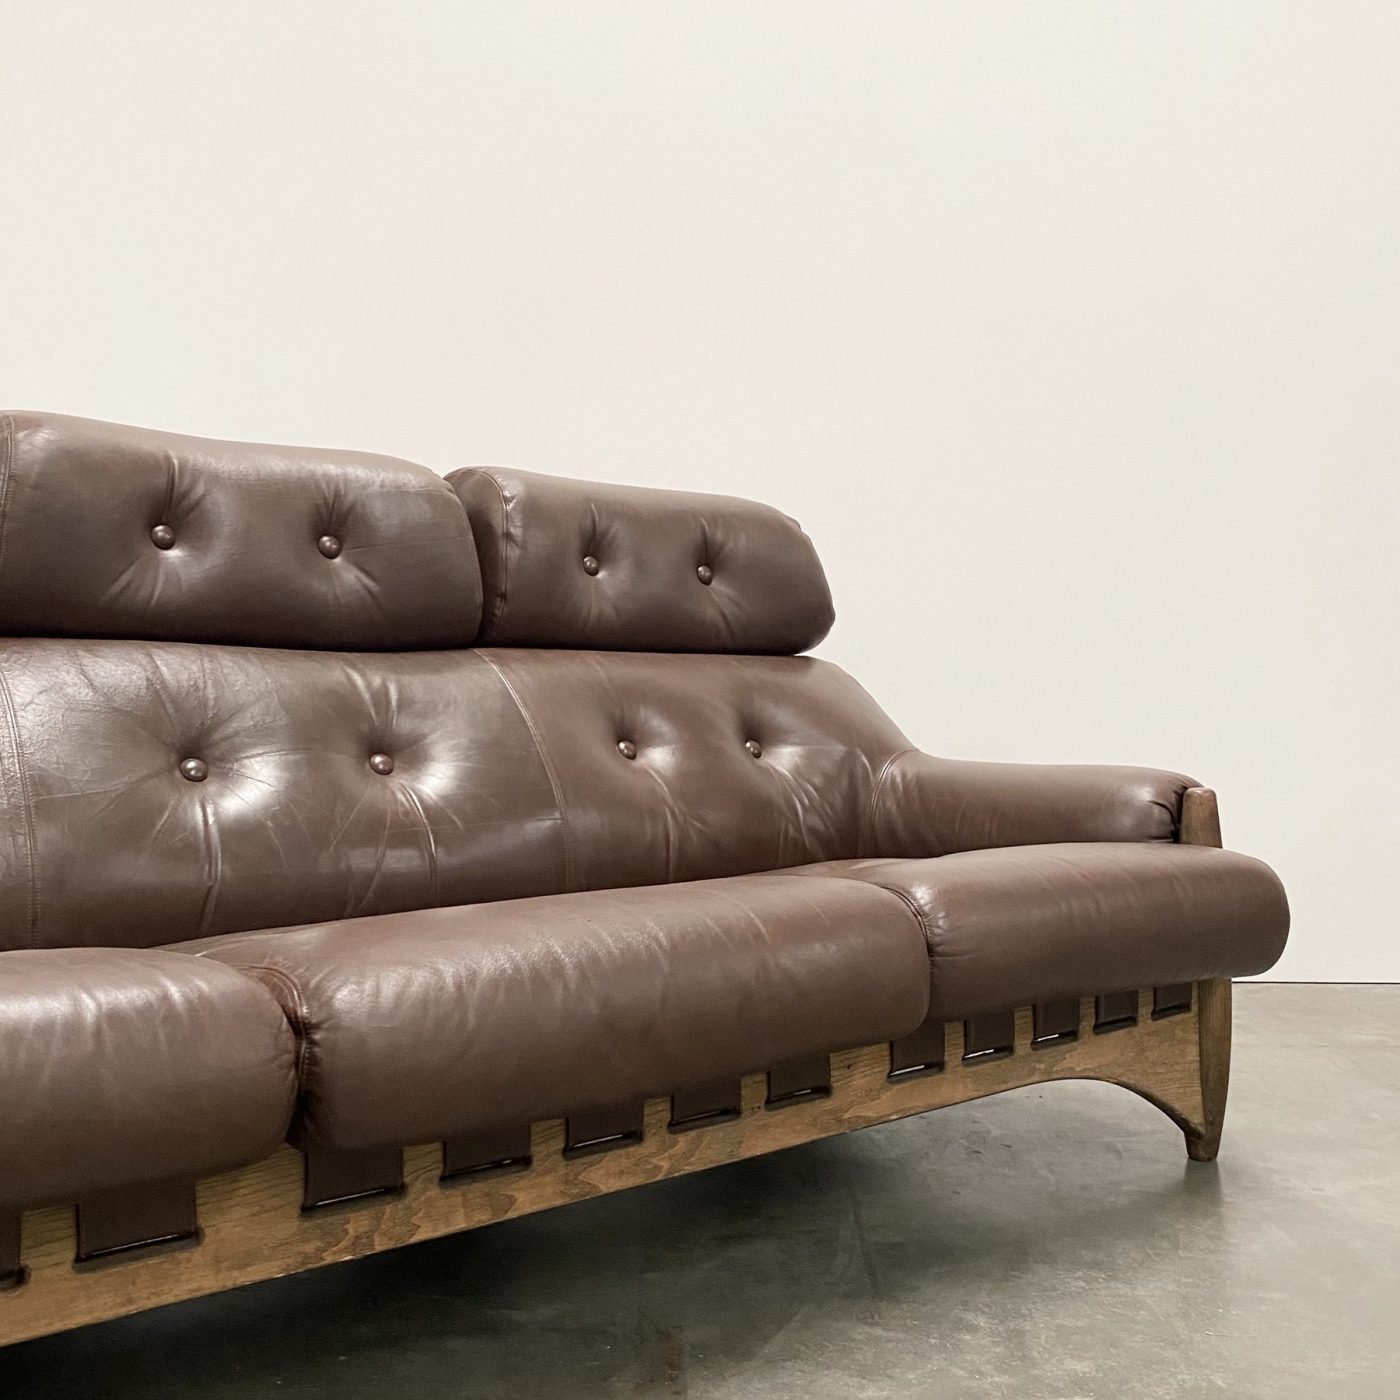 objet-vagabond-leather-sofa0003